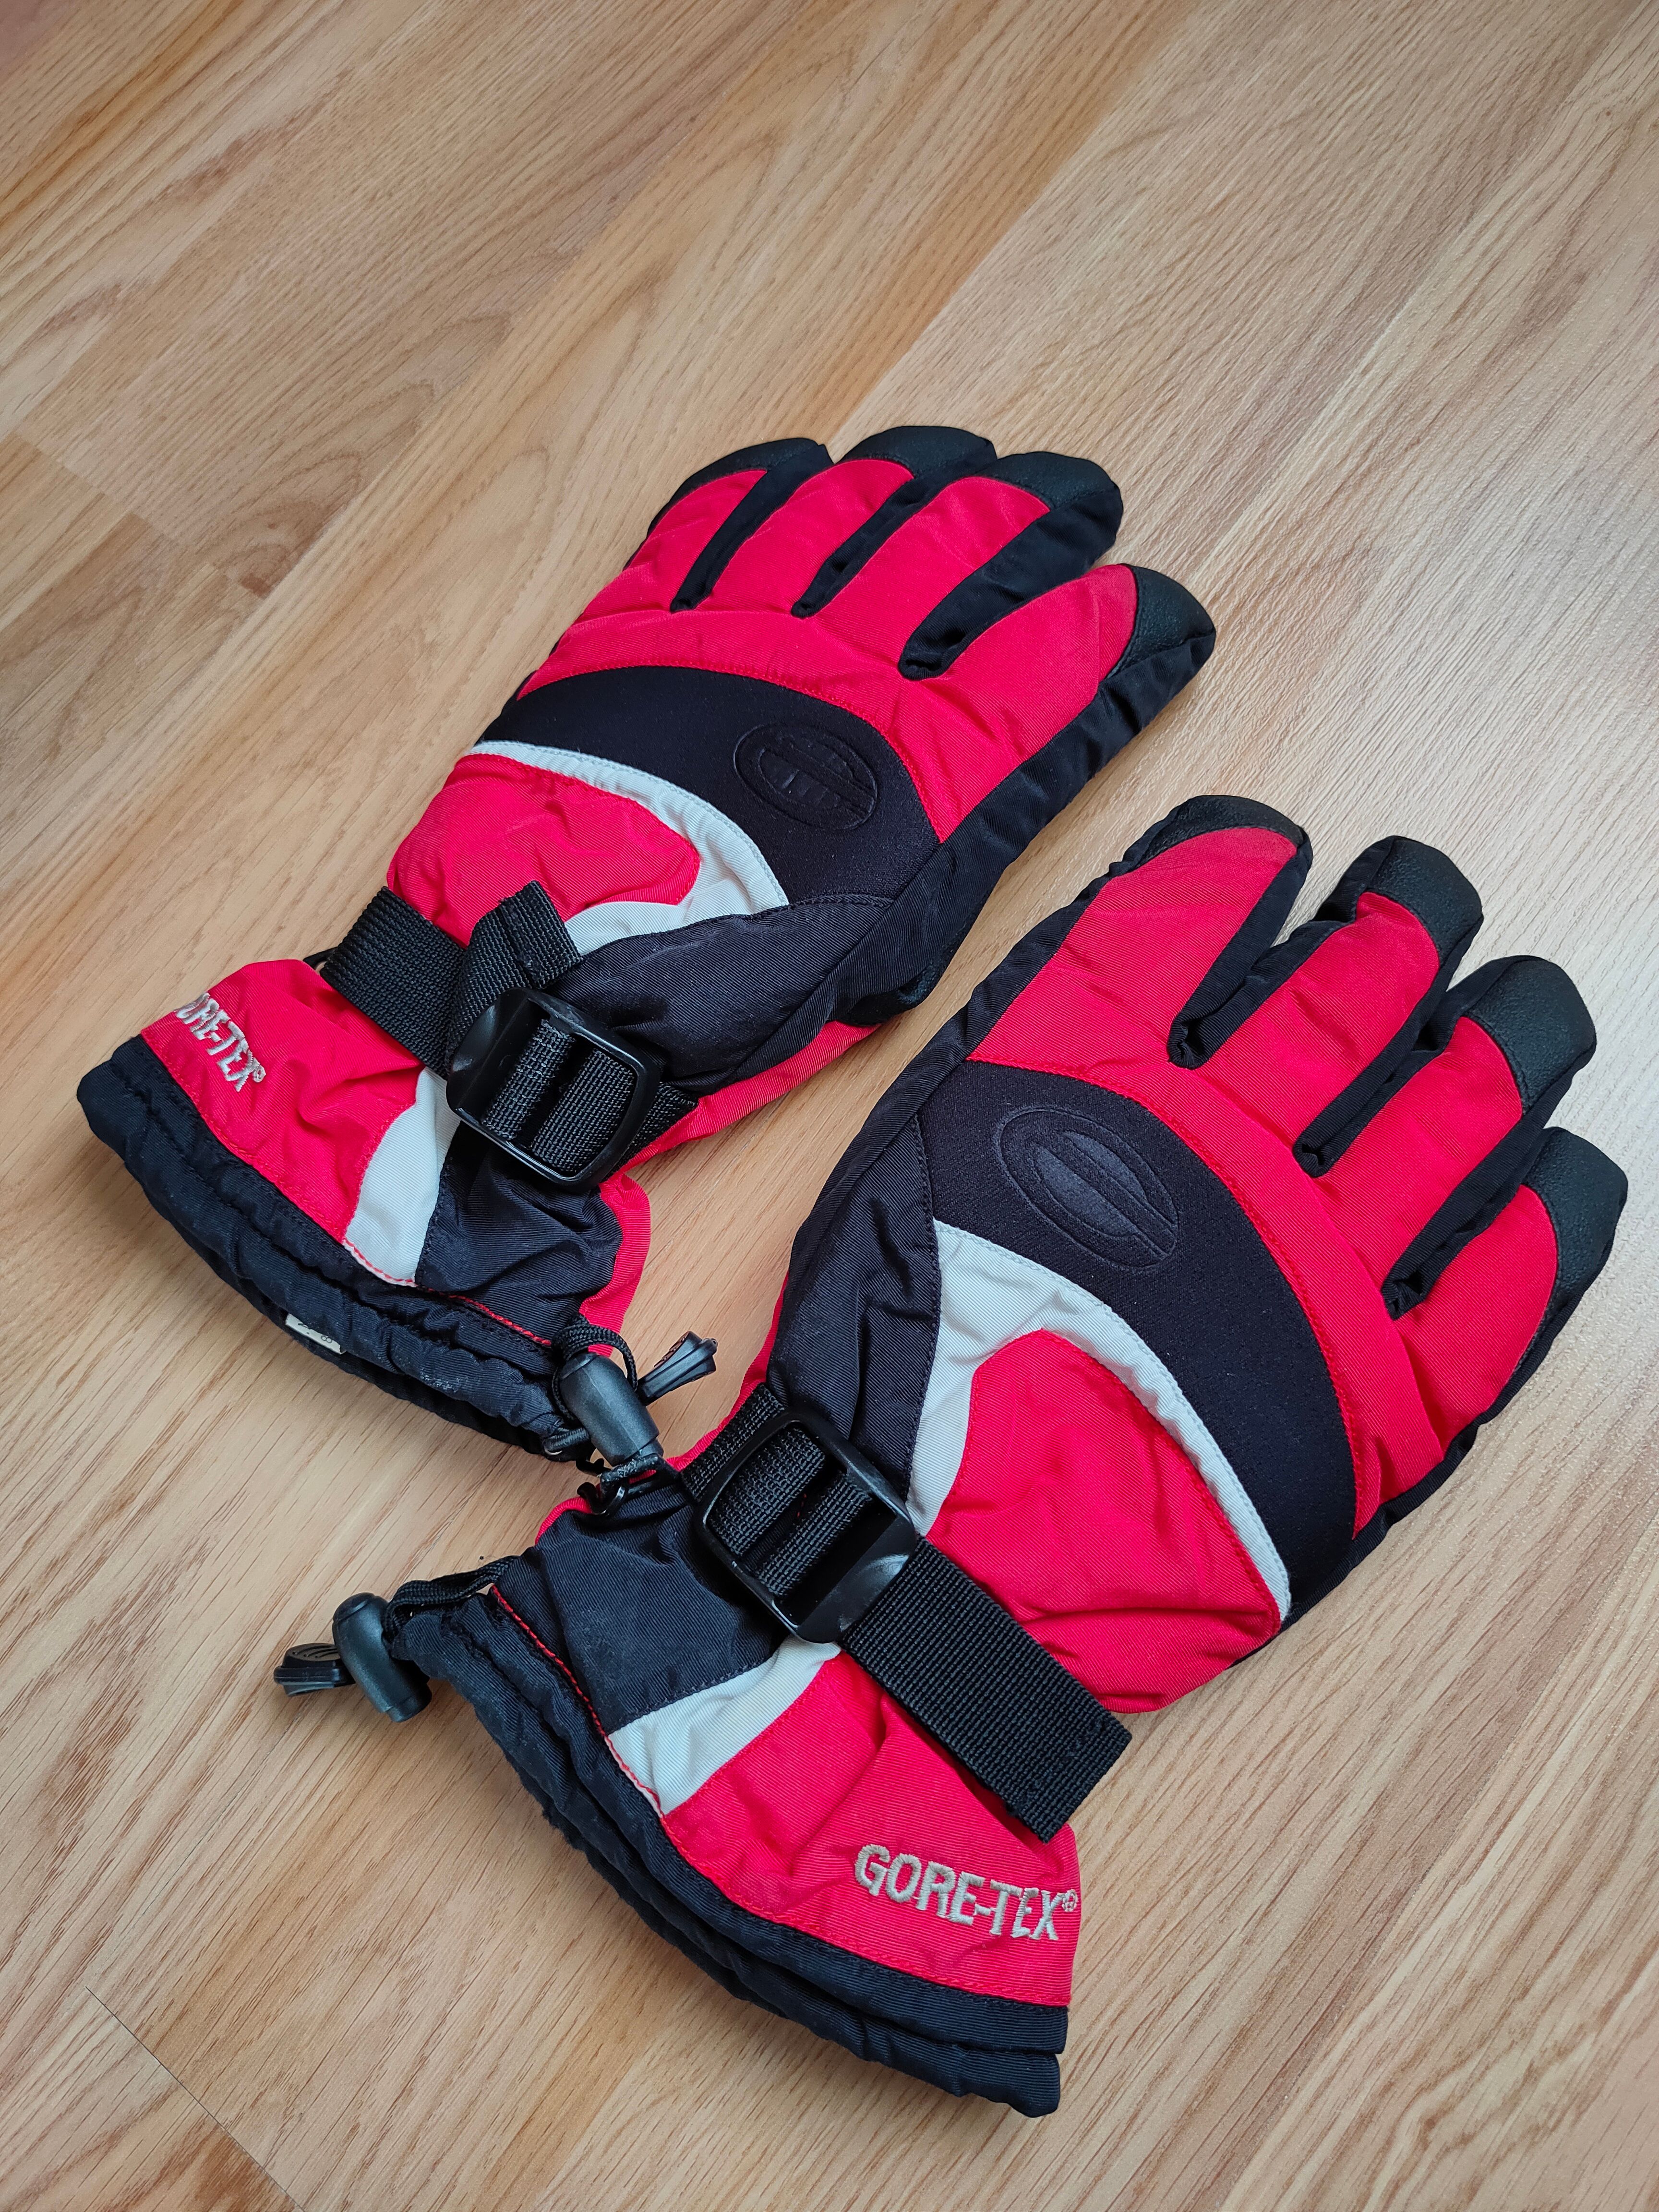 Ski Vintage Ziener Goretex Gloves Gorpcore Outdoor Ski Gloves Size ONE SIZE - 1 Preview